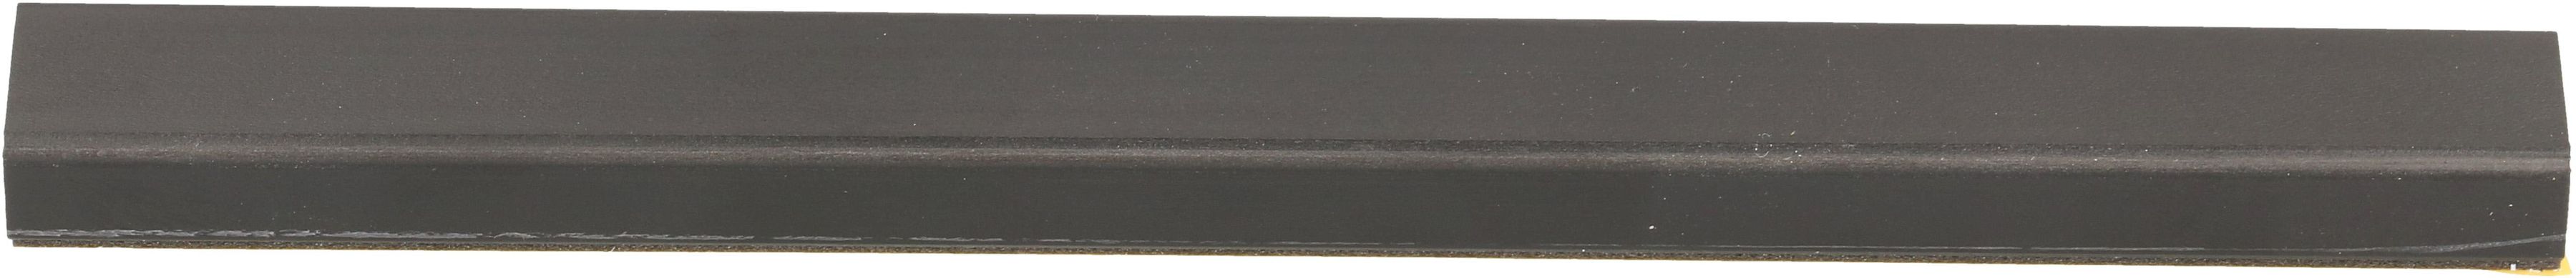 Kabelkanal 16x10mm schwarz selbstklebend 2m